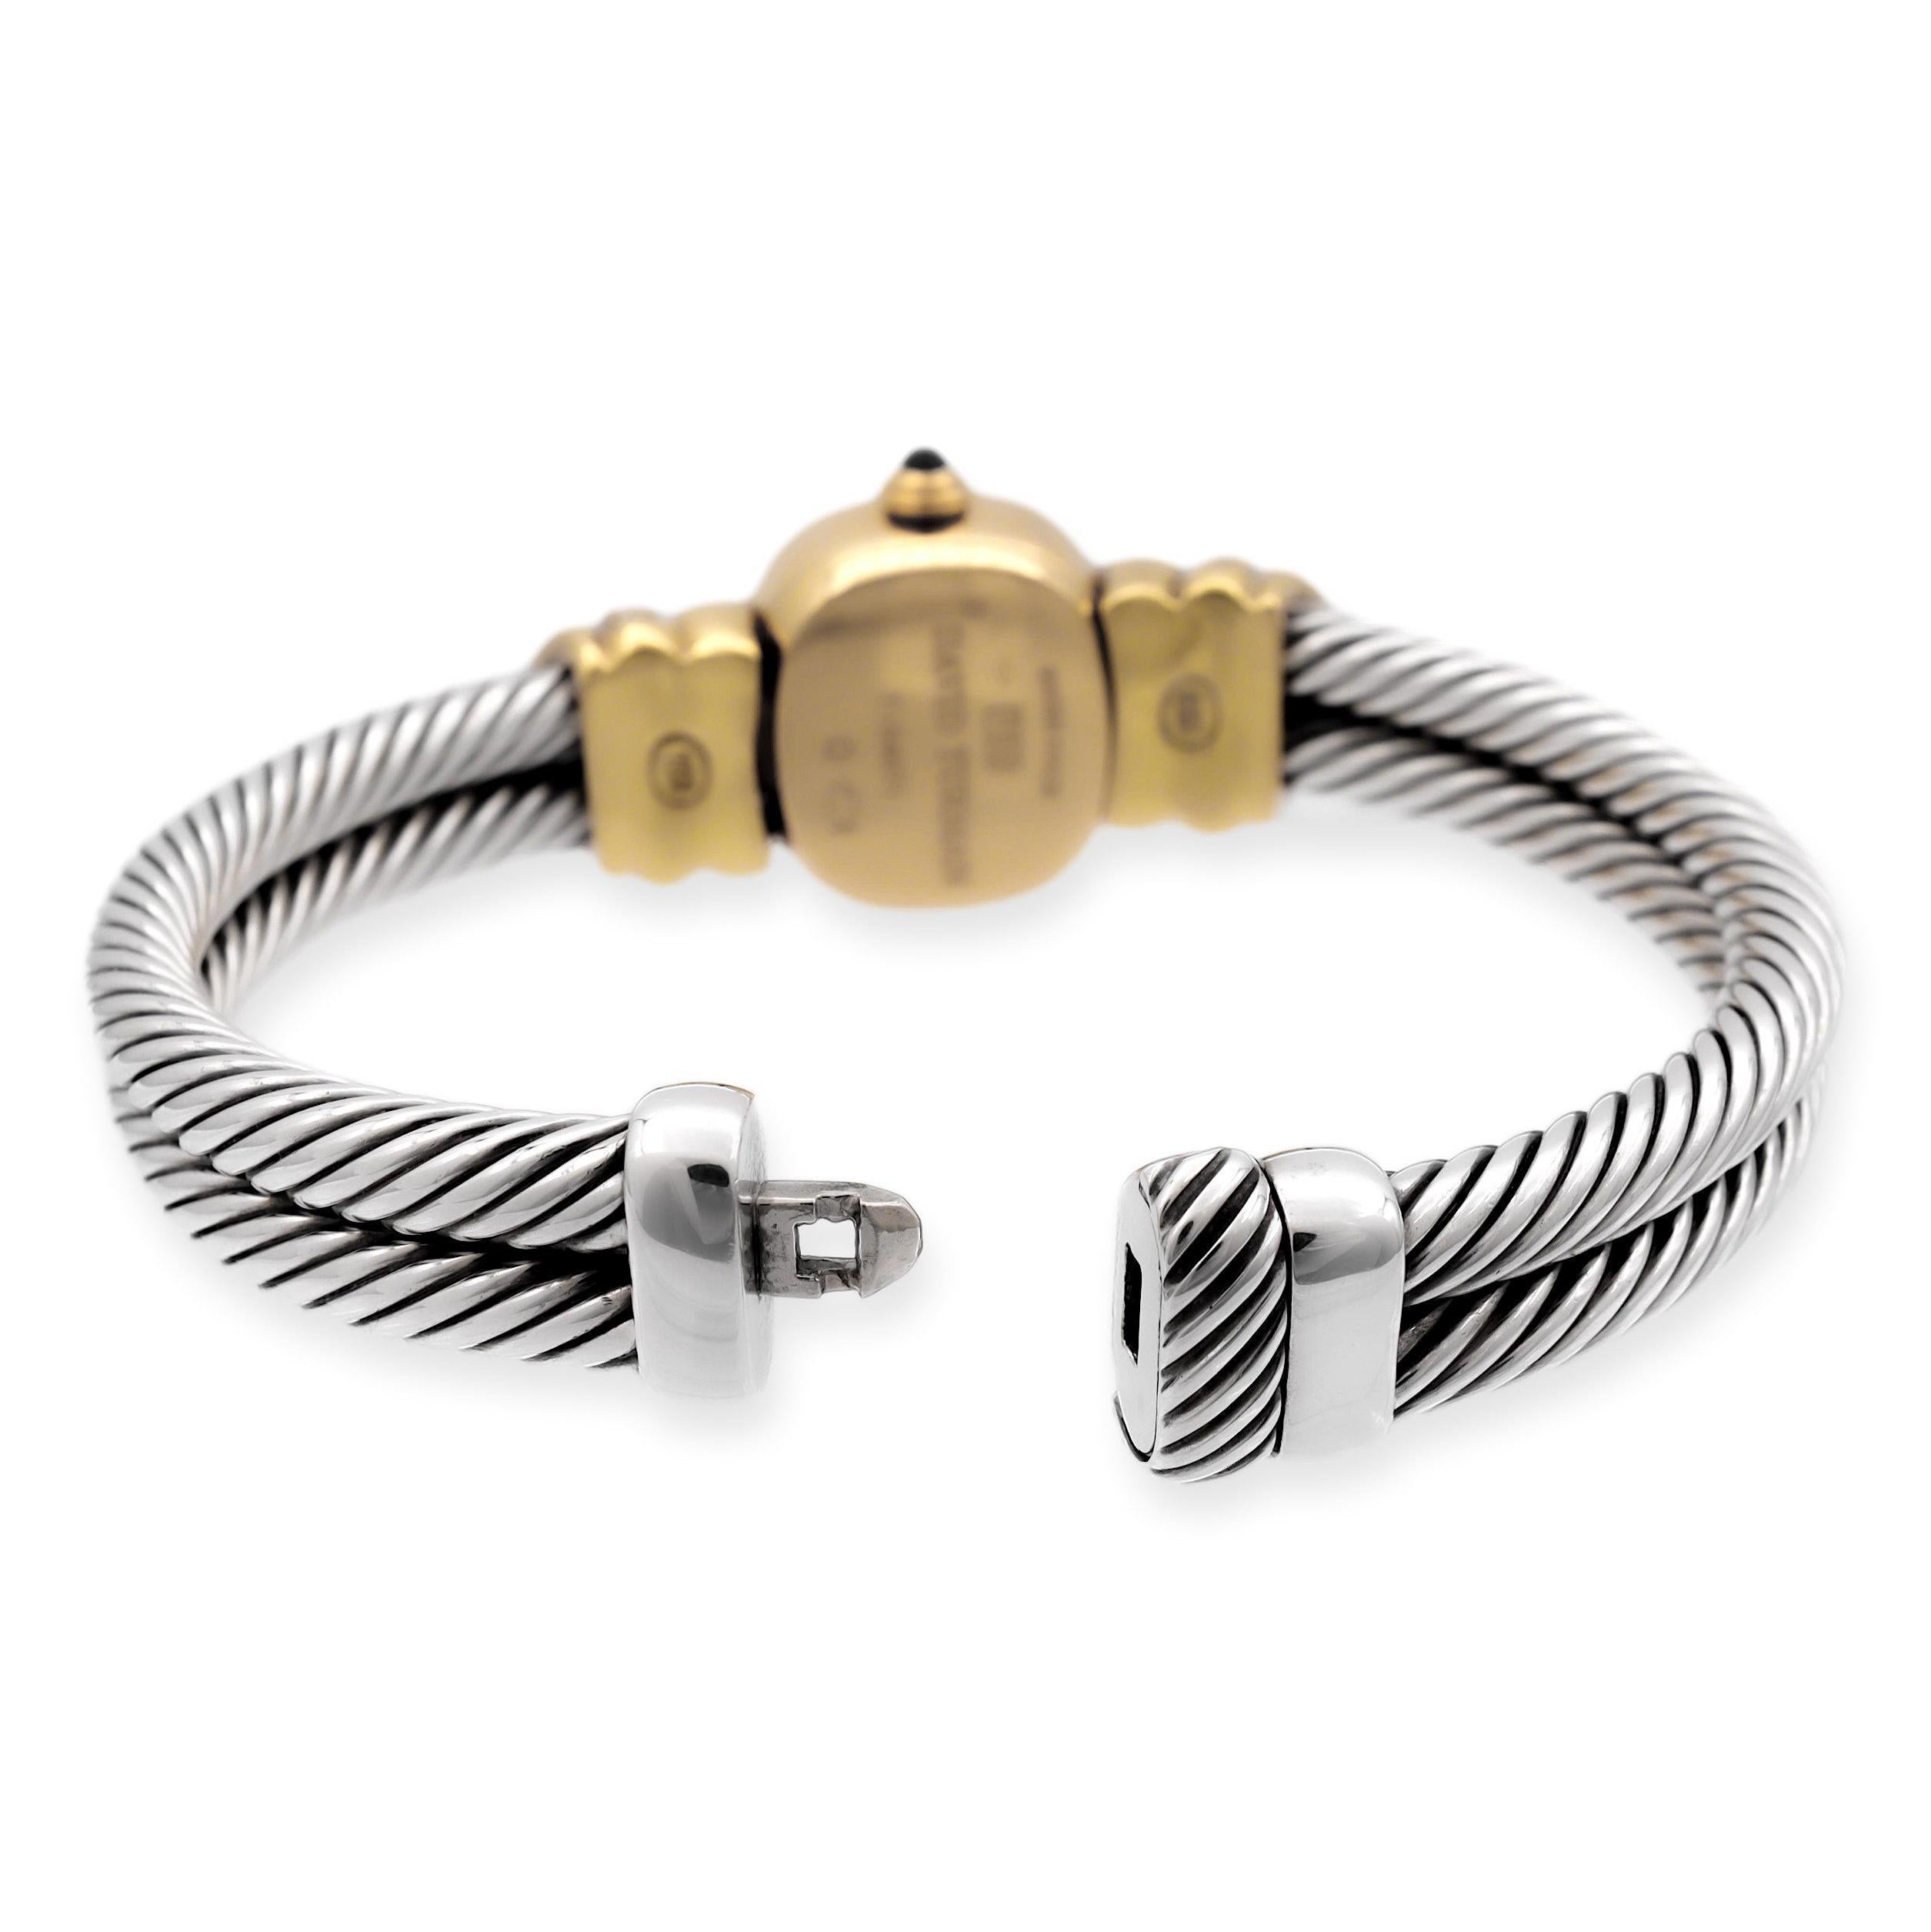 Contemporary Vintage David Yurman Ladies 18K Gold Sterling Silver Diamond Wrist Cable Watch